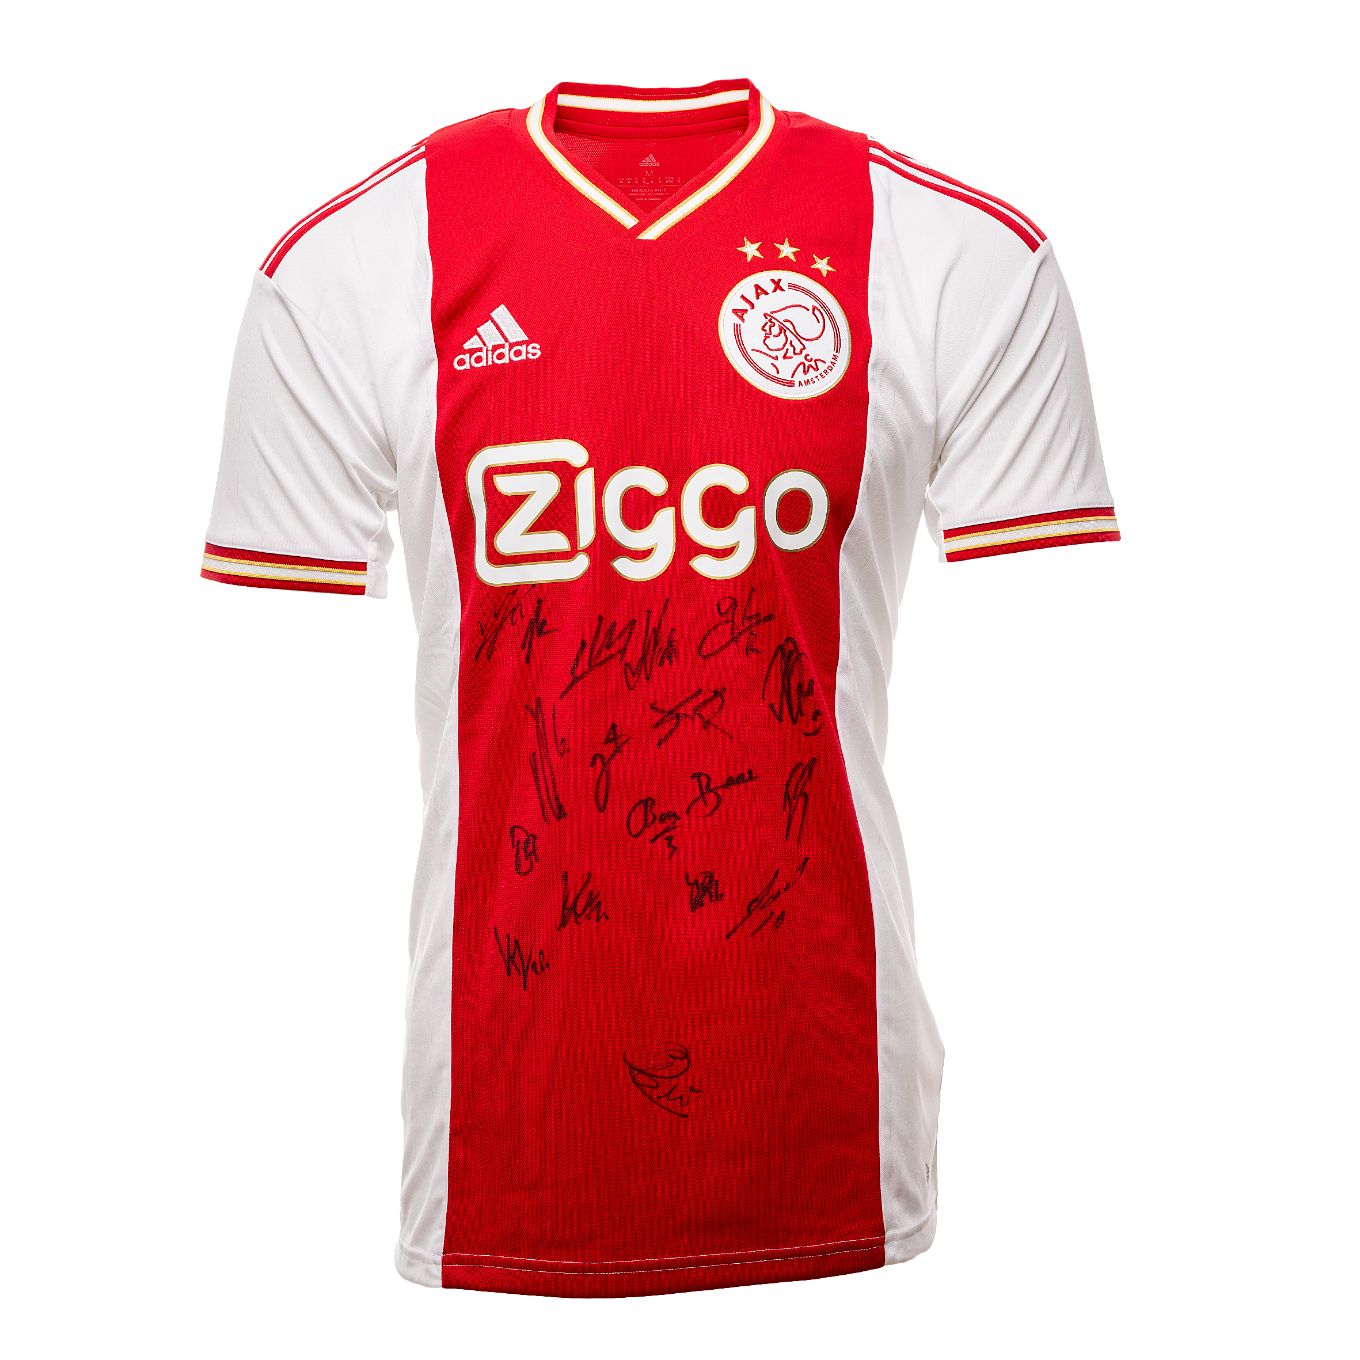 Gesigneerd shirt Ajax